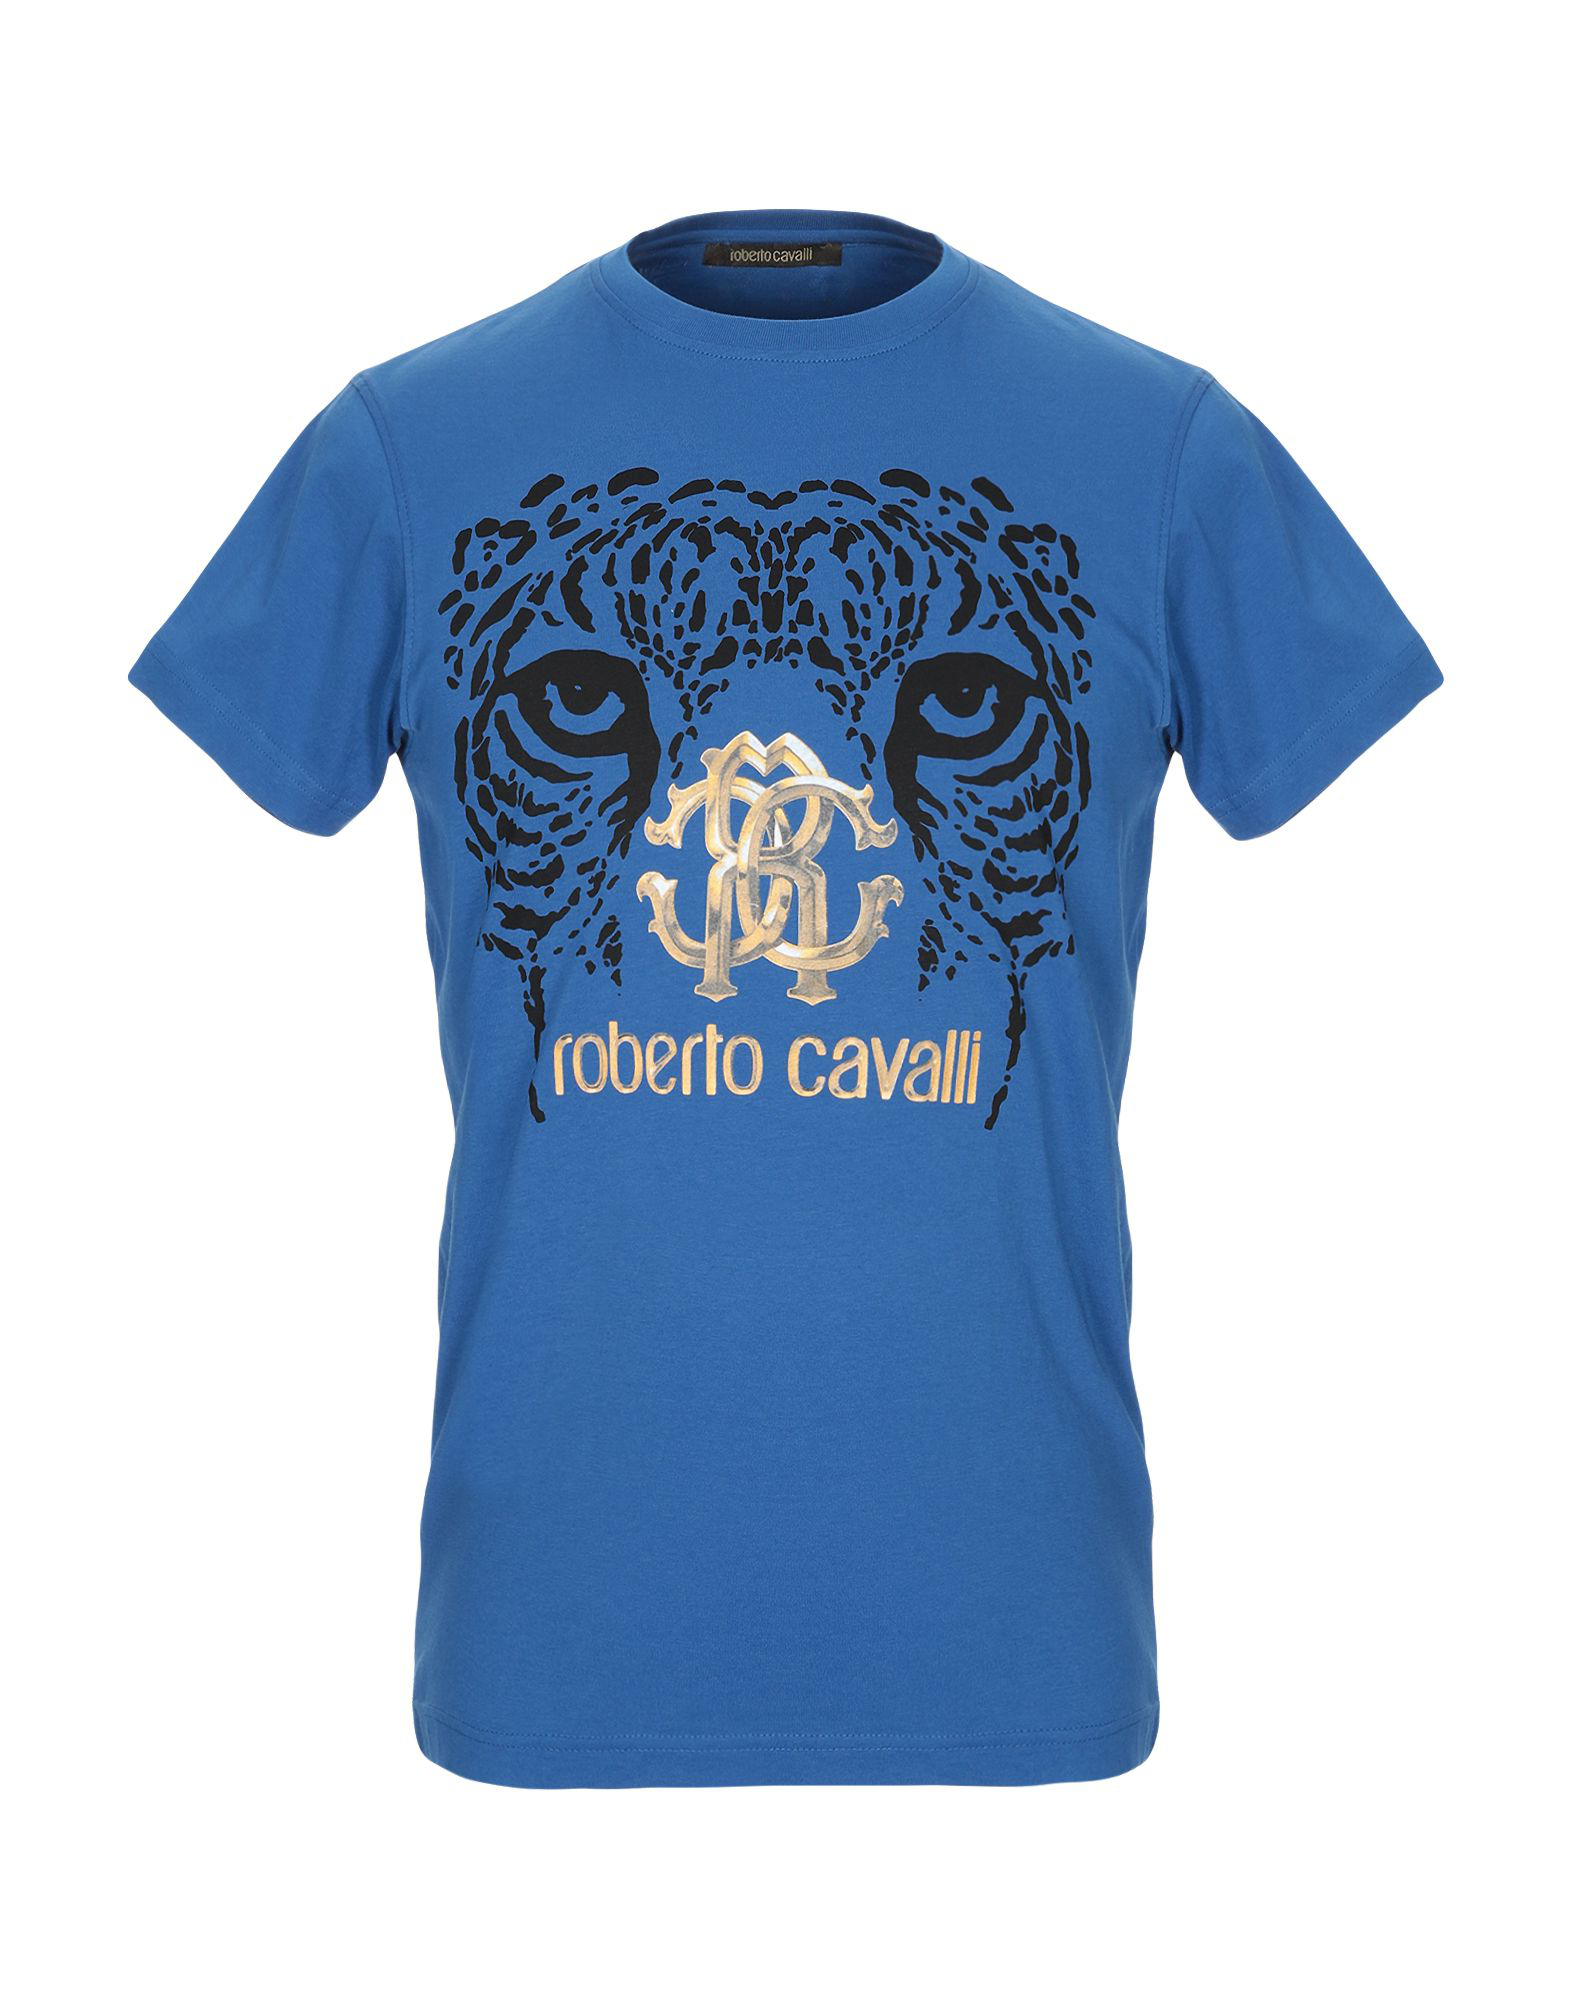 Roberto Cavalli T-shirt In Bright Blue | ModeSens